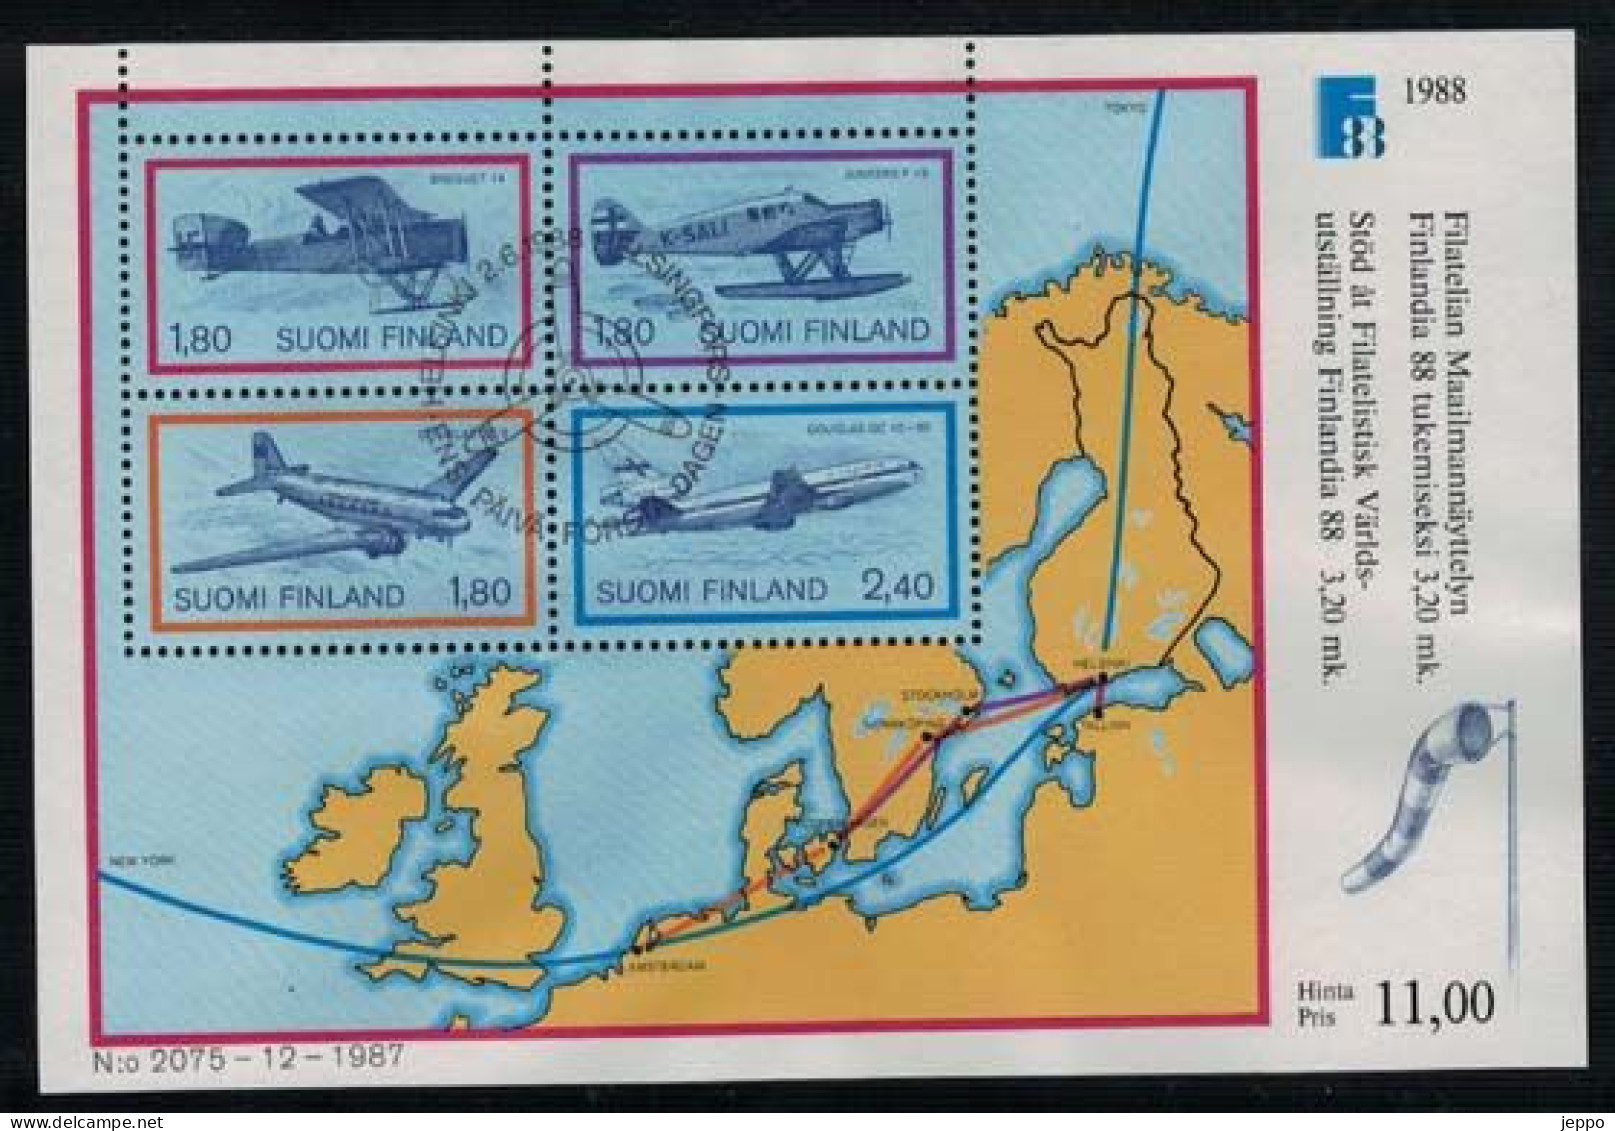 1988 Finland Michel Bl 4, Finlandia 88 Aeroplanes, FD Stamped. - Hojas Bloque